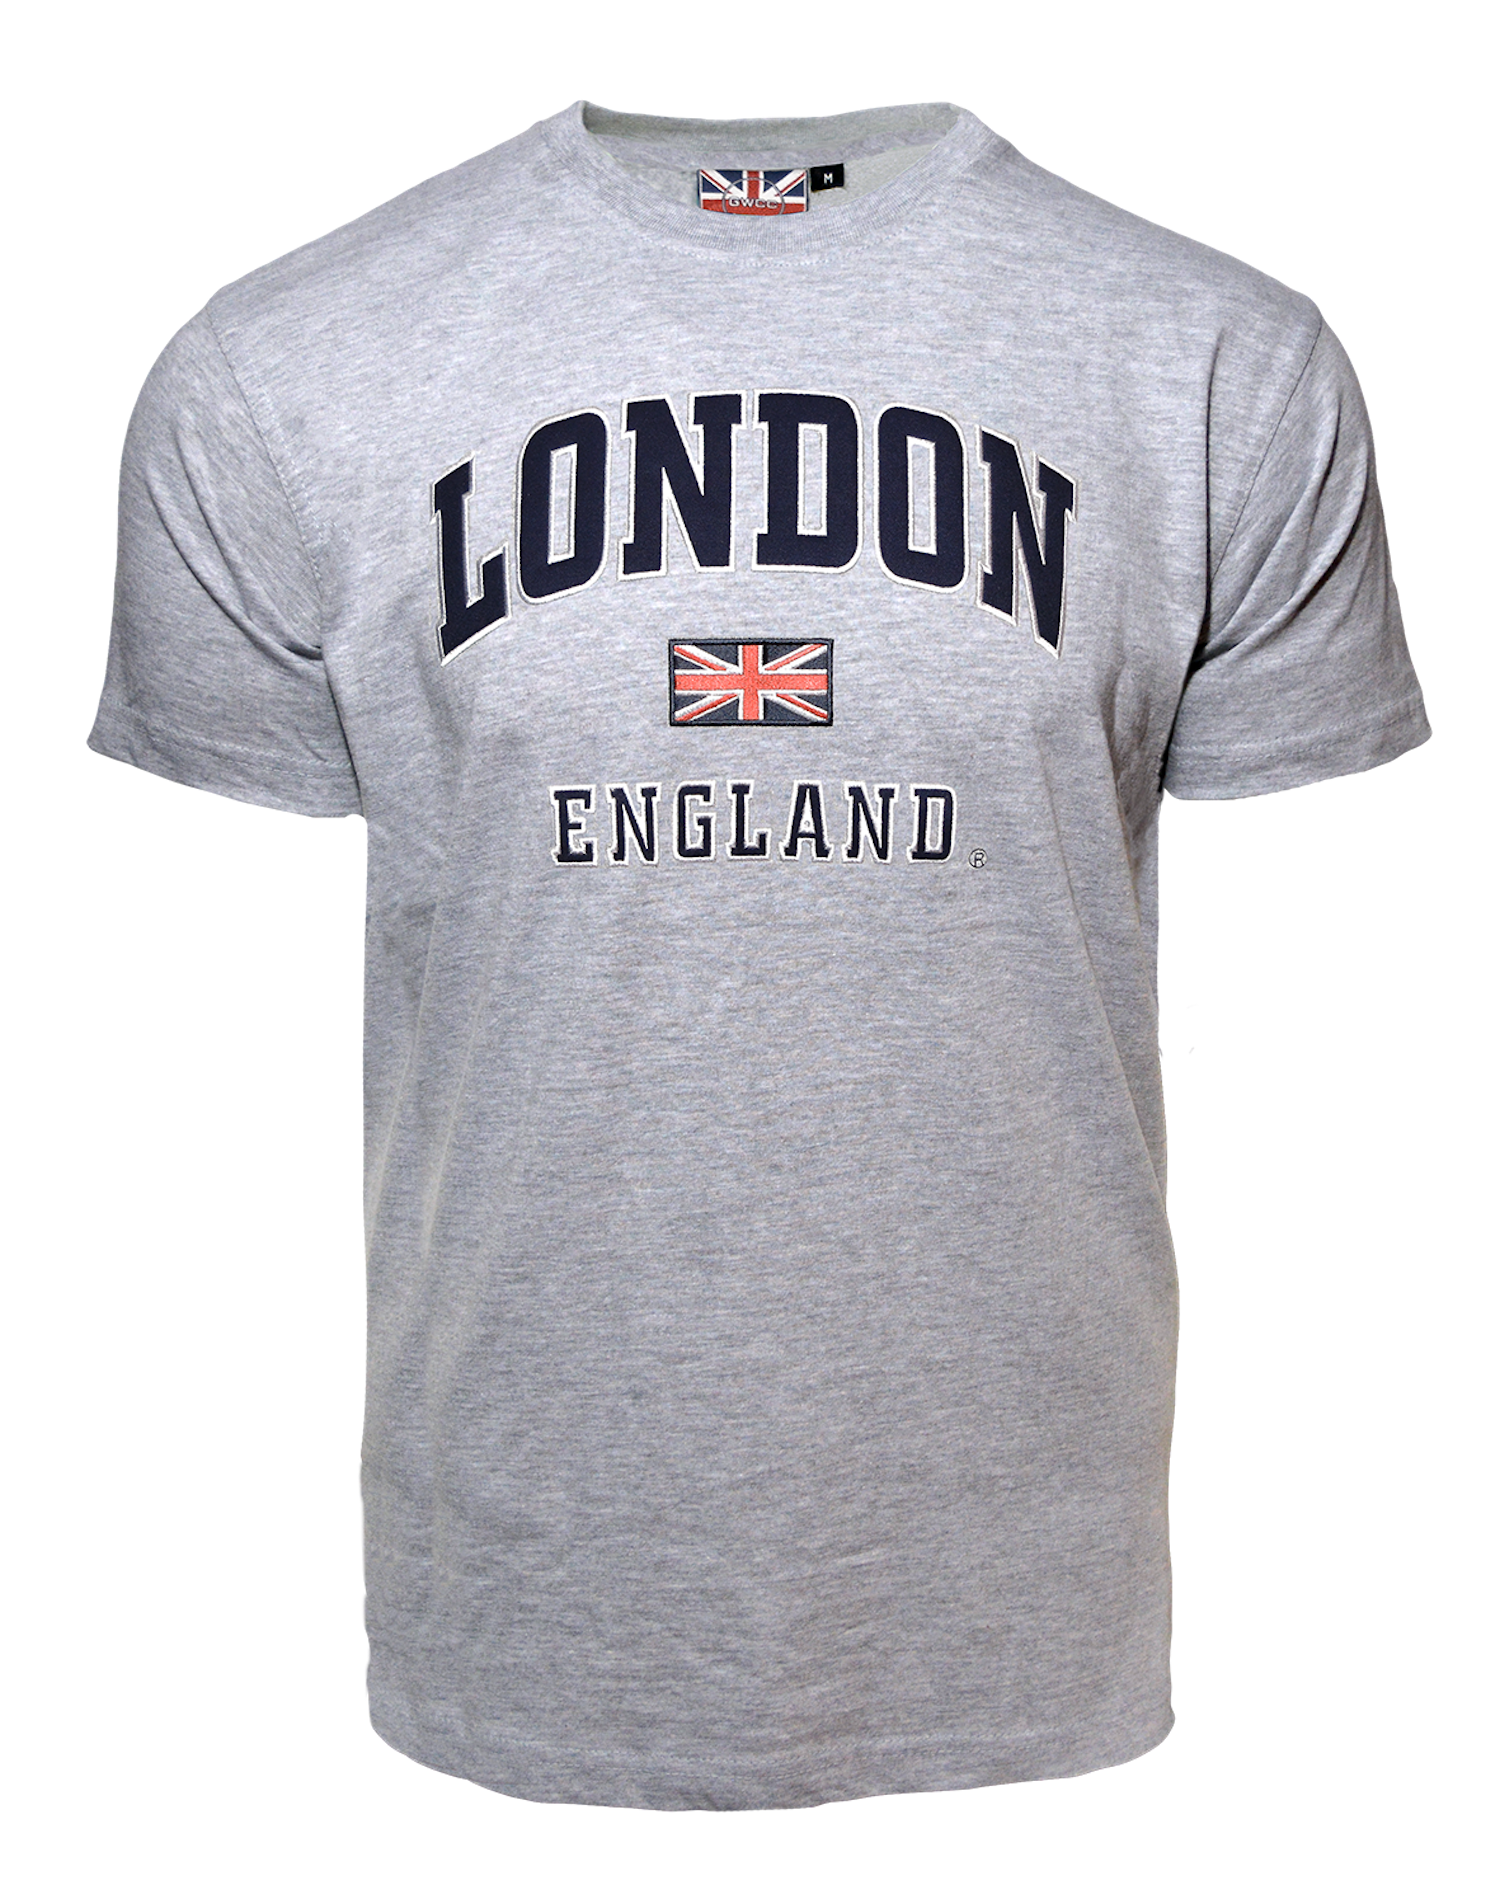 LE105GN Unisex London england Applique Embroidery T Shirt - British Heritage Brands